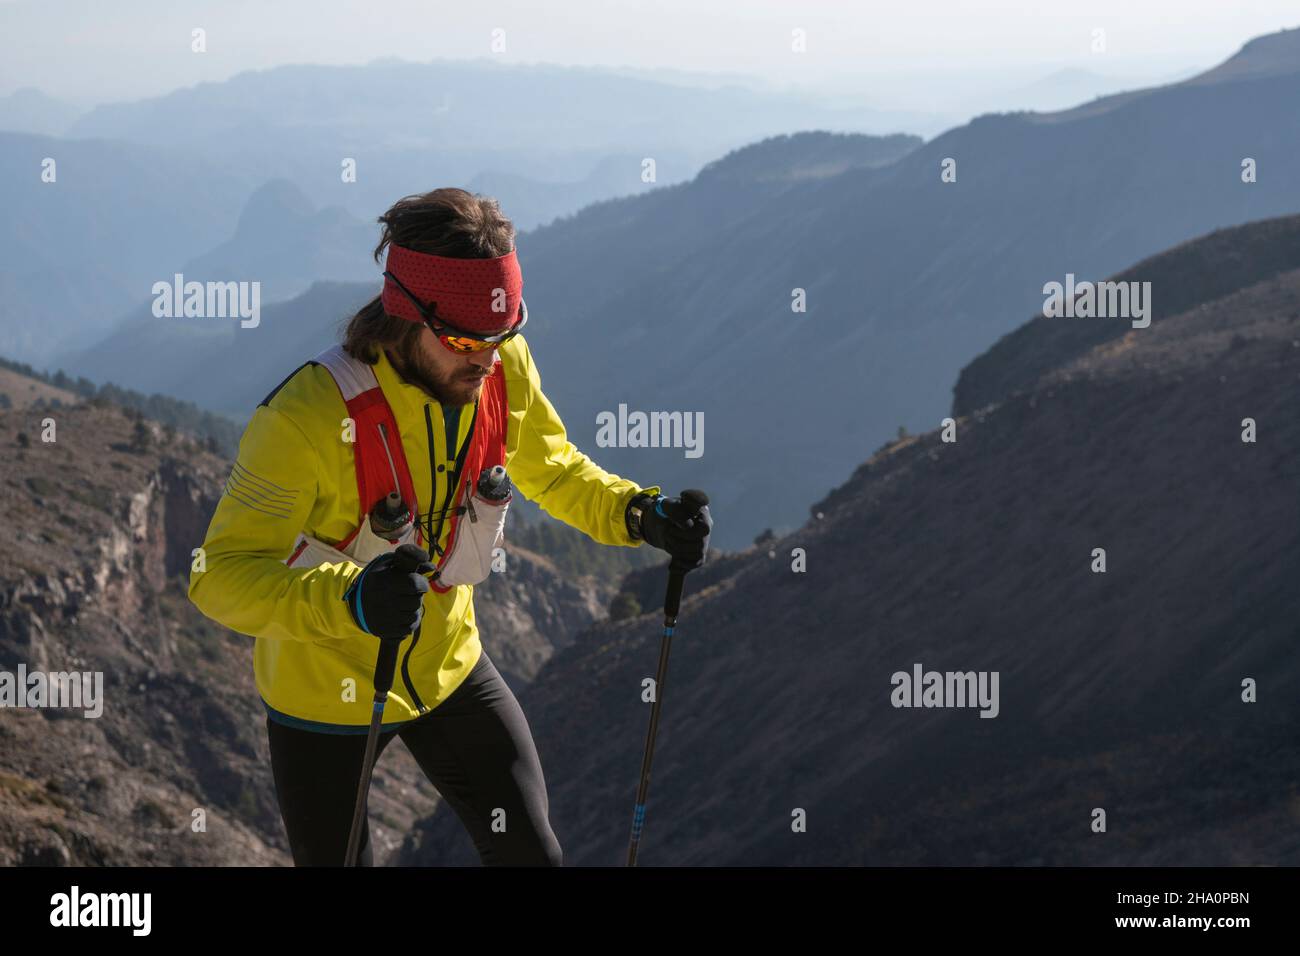 Un hombre vestido de amarillo usando postes sube hasta Pico de Orizaba Foto de stock